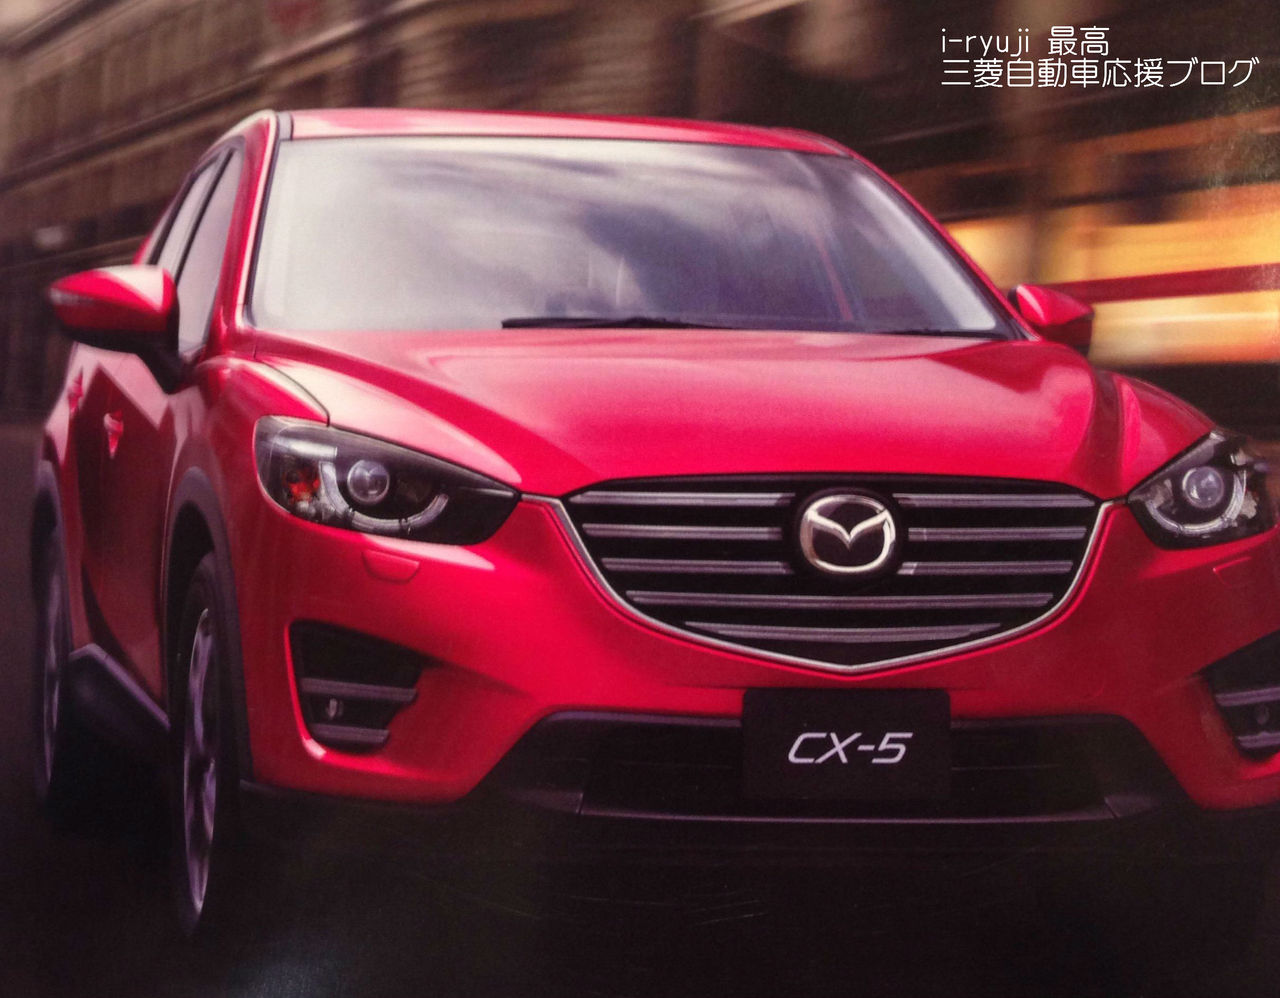 International, Mazda CX-5 Facelift 2015: Brosur Mazda CX-5 Facelift 2015 Bocor: Ternyata Ubahannya Tidak Banyak